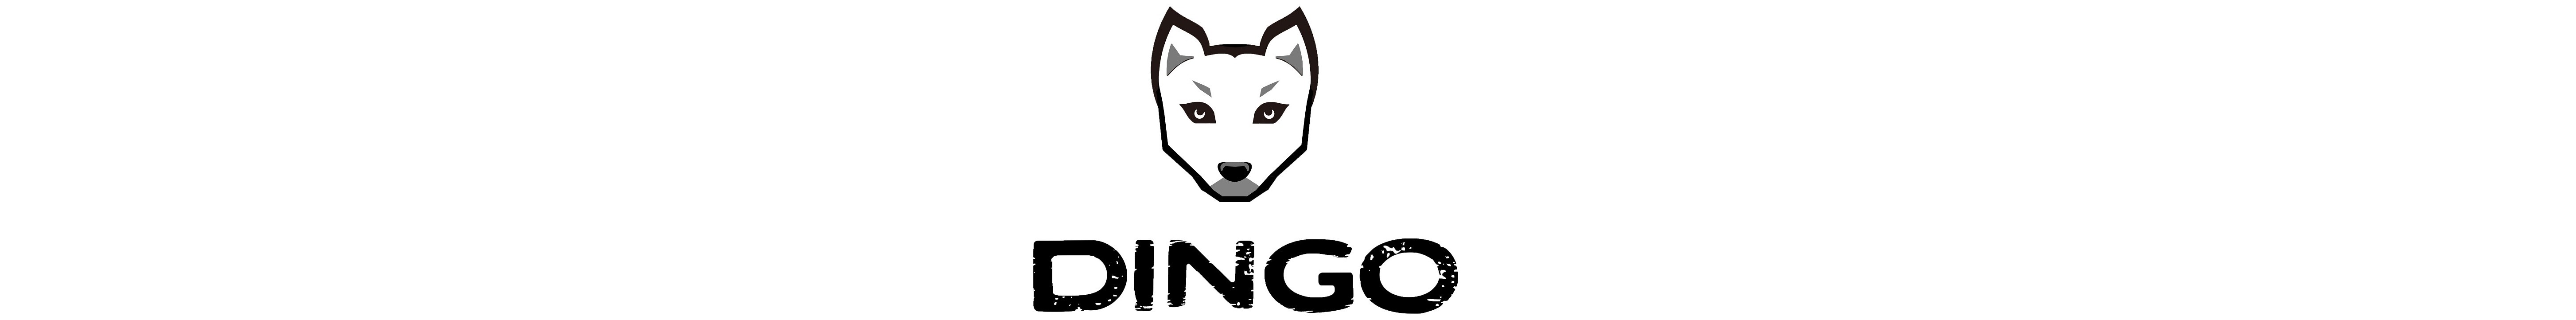 Dingo DIstribution Service